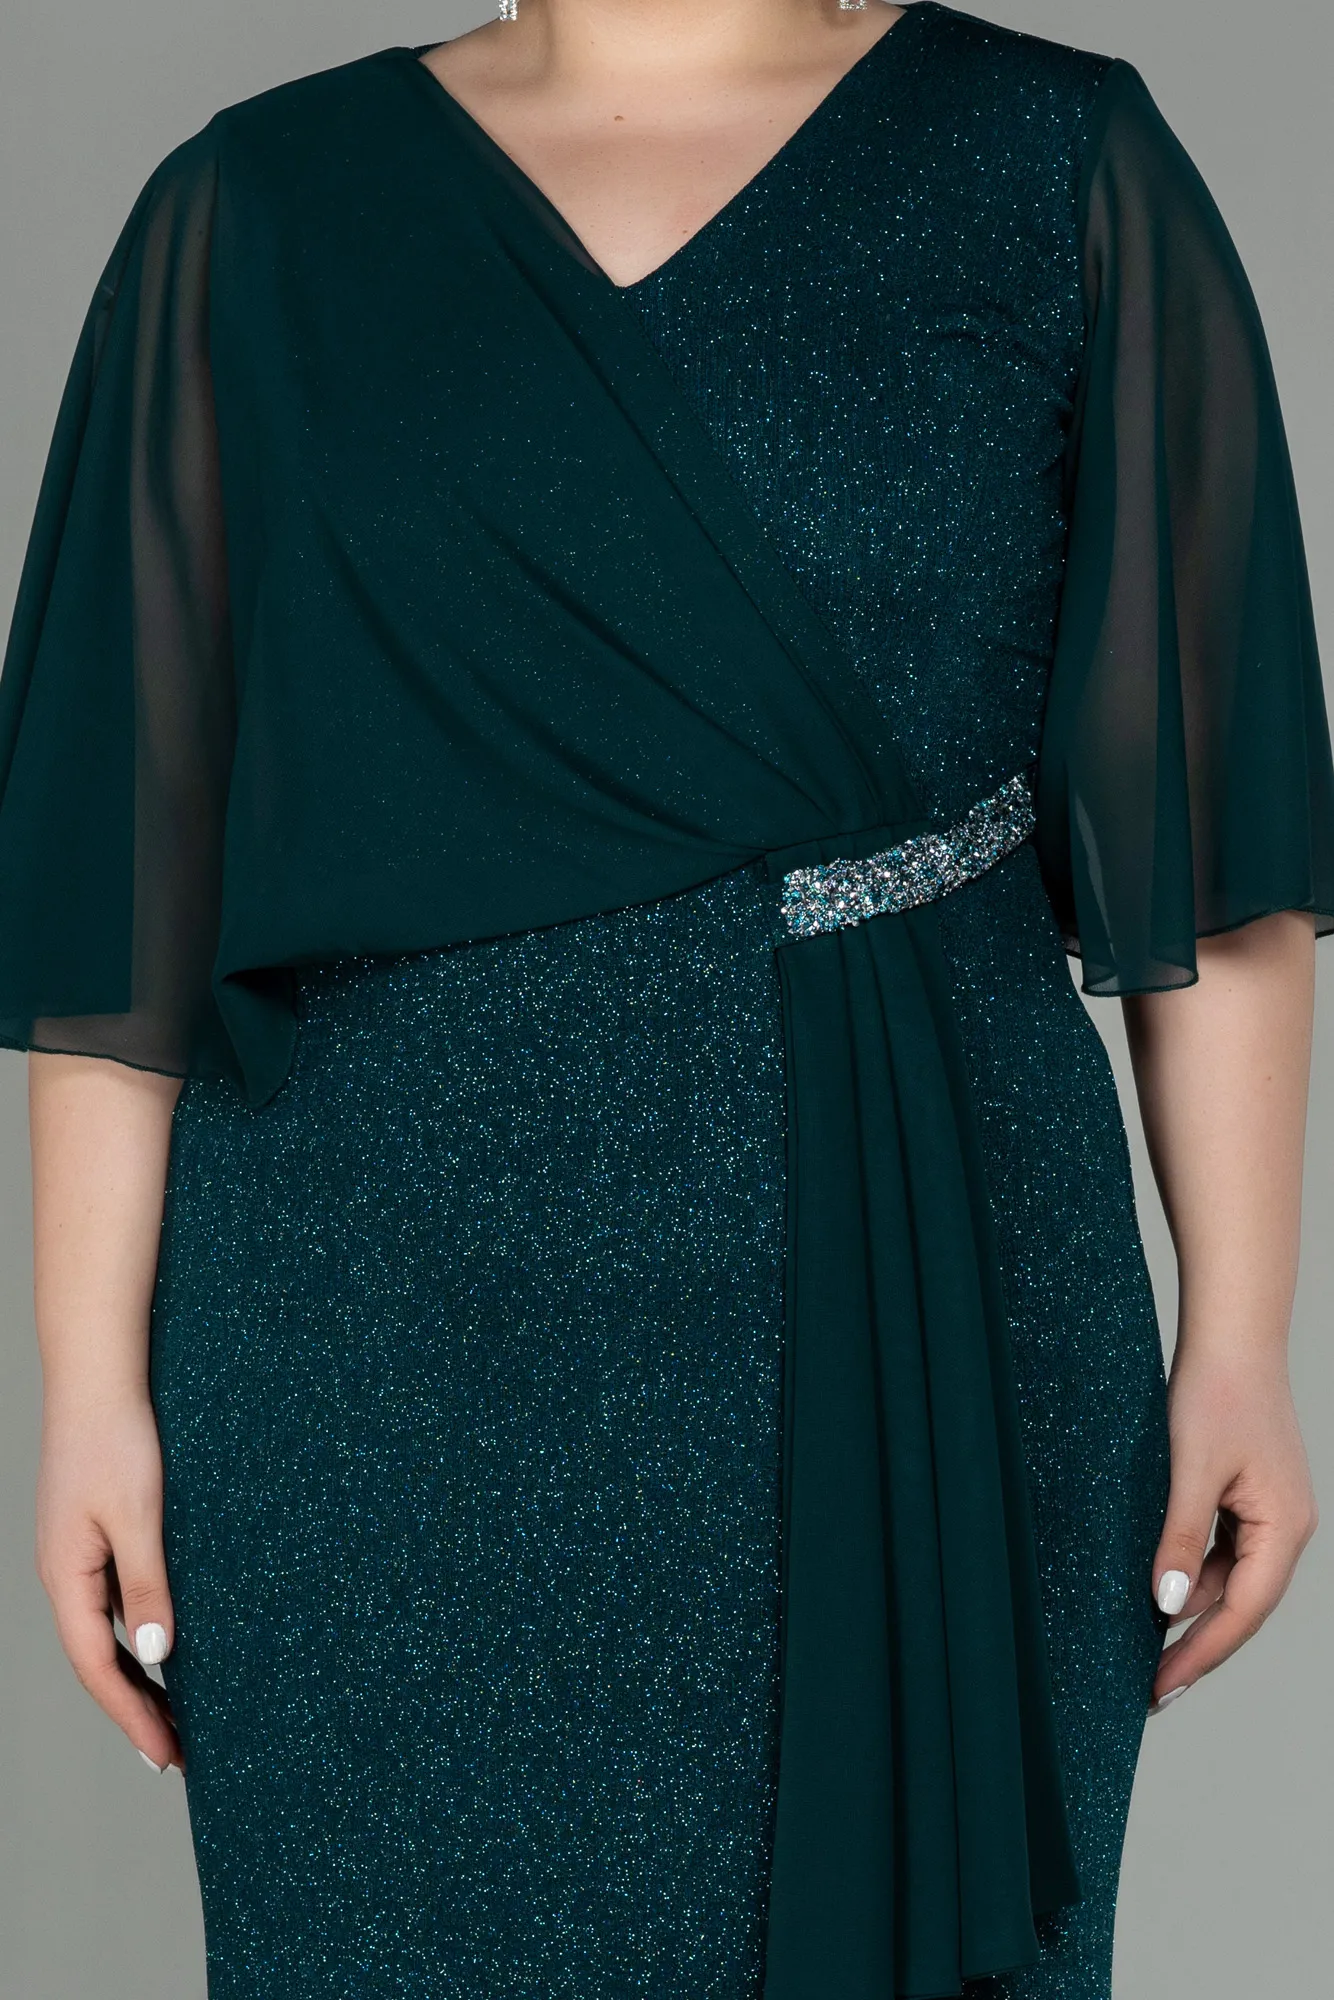 Emerald Green-Long Plus Size Evening Dress ABU2857